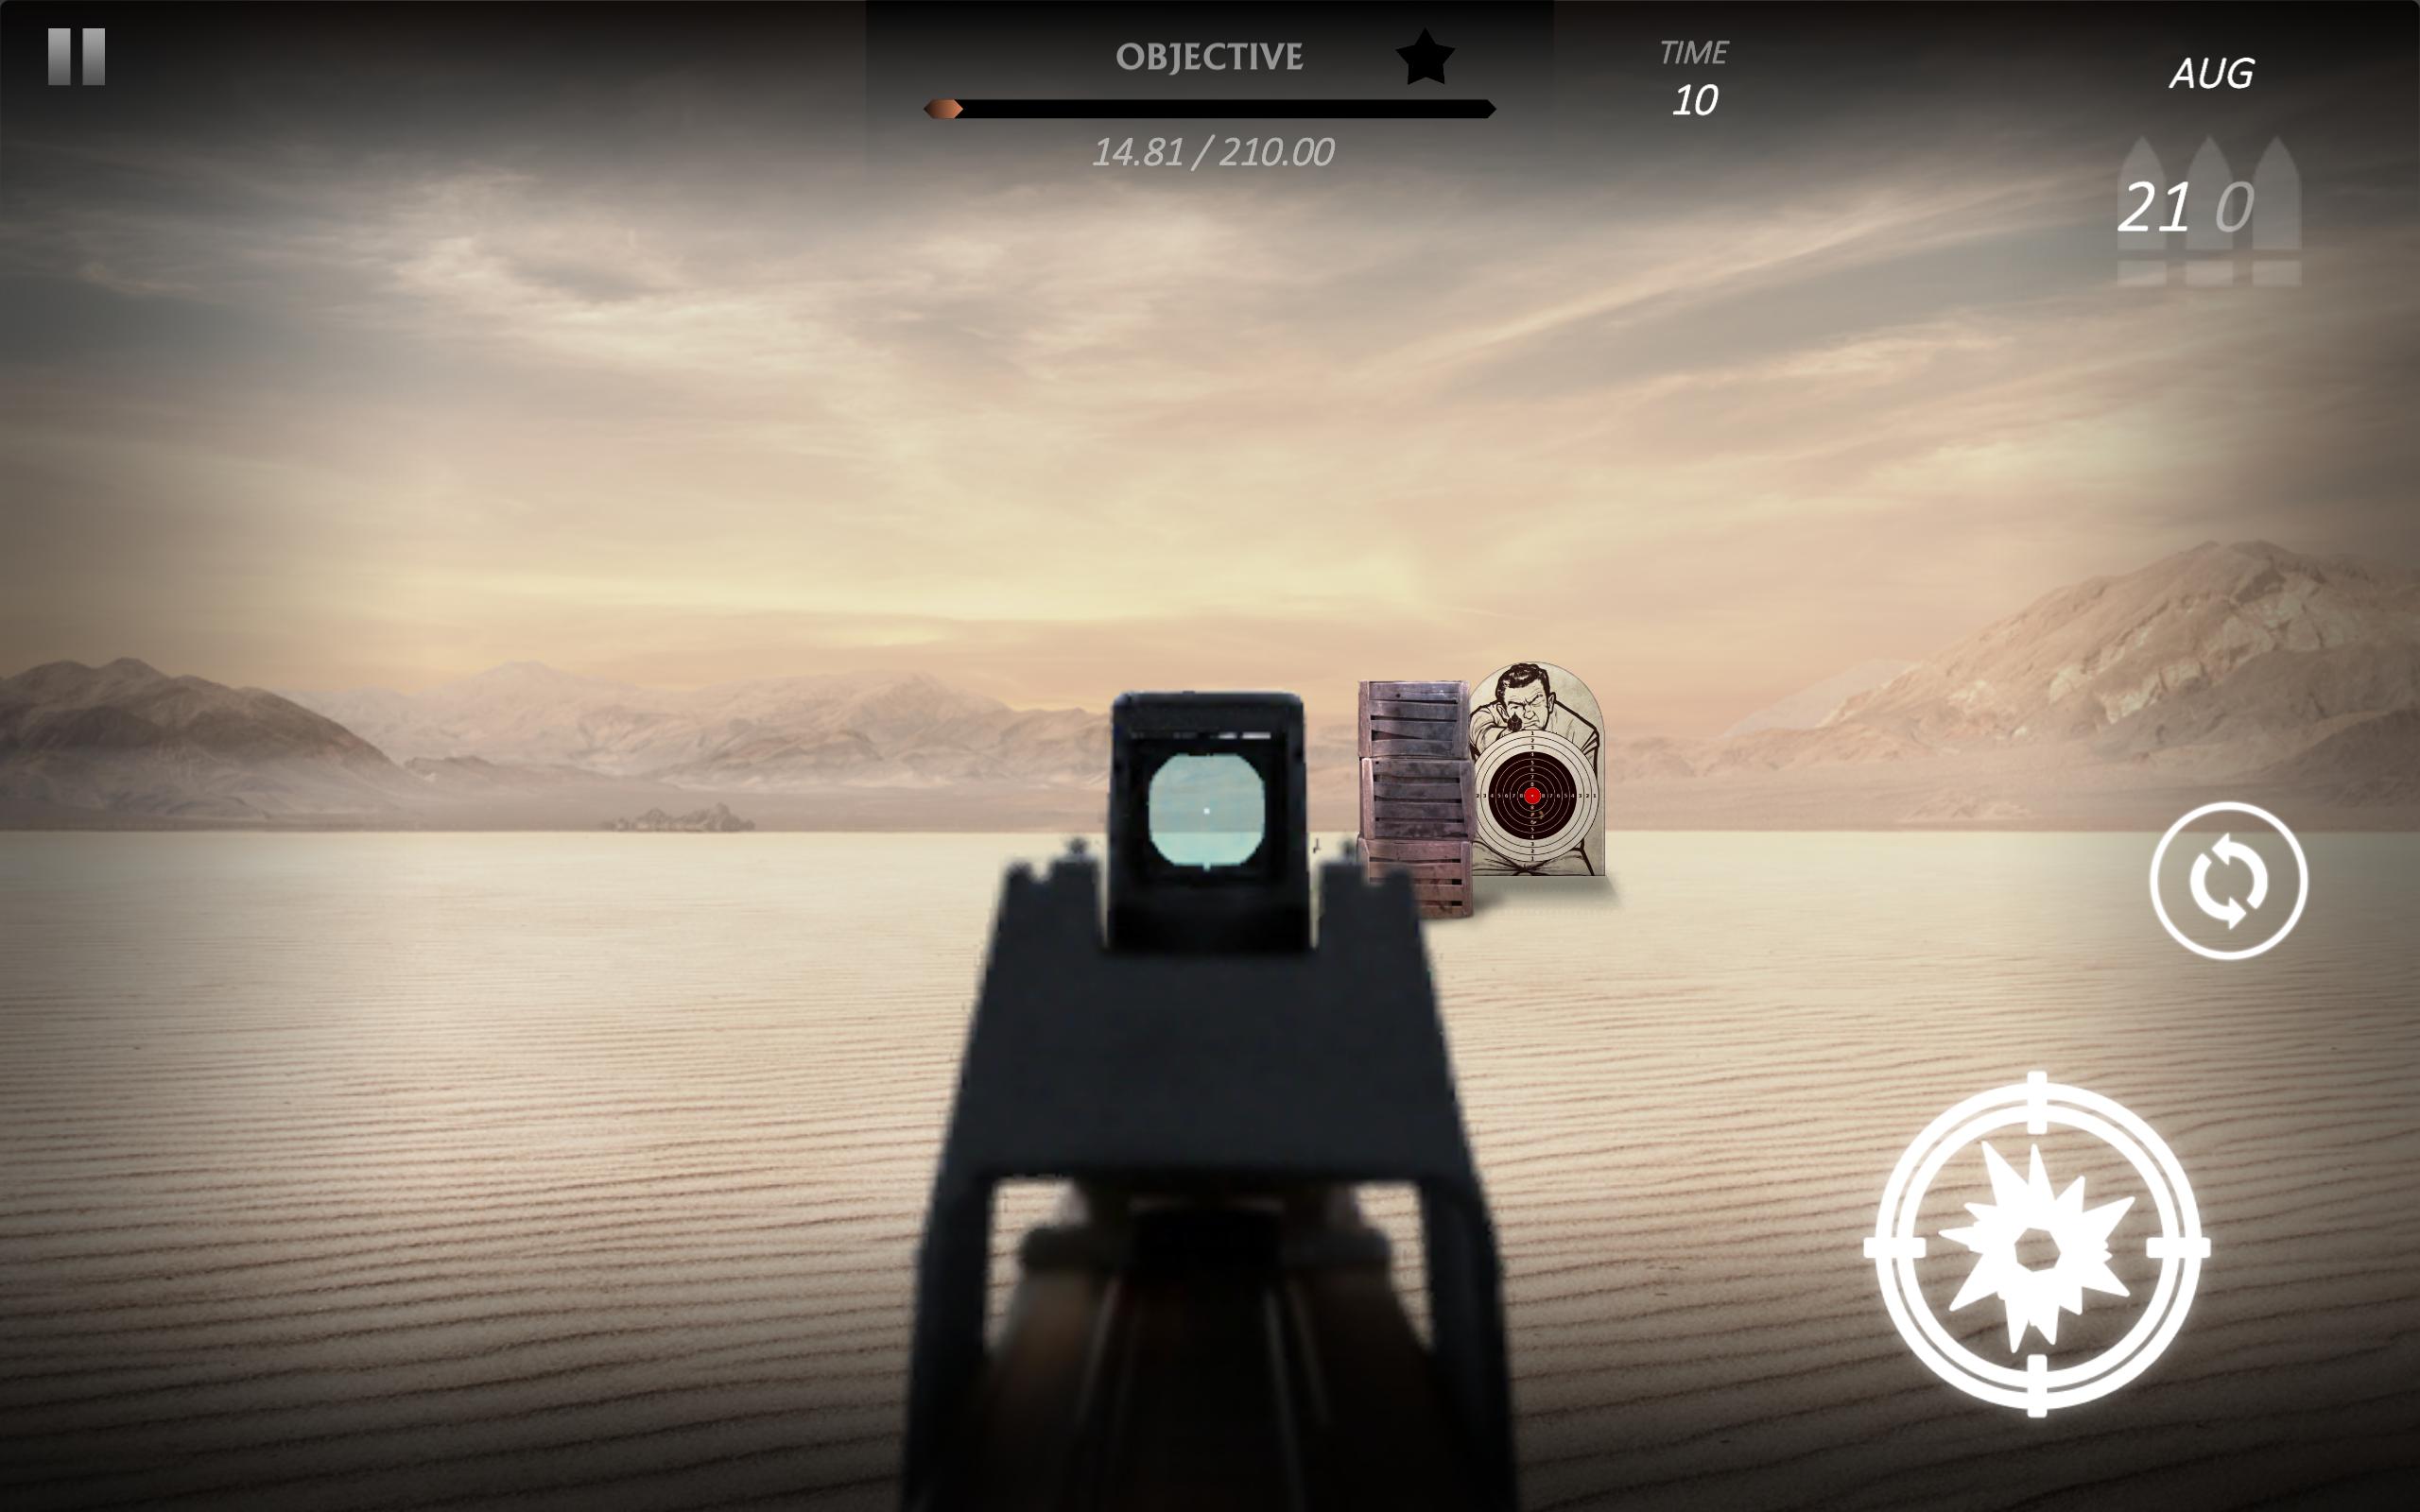 Canyon Shooting 2 - Free Shooting Range 3.0.6 Screenshot 9